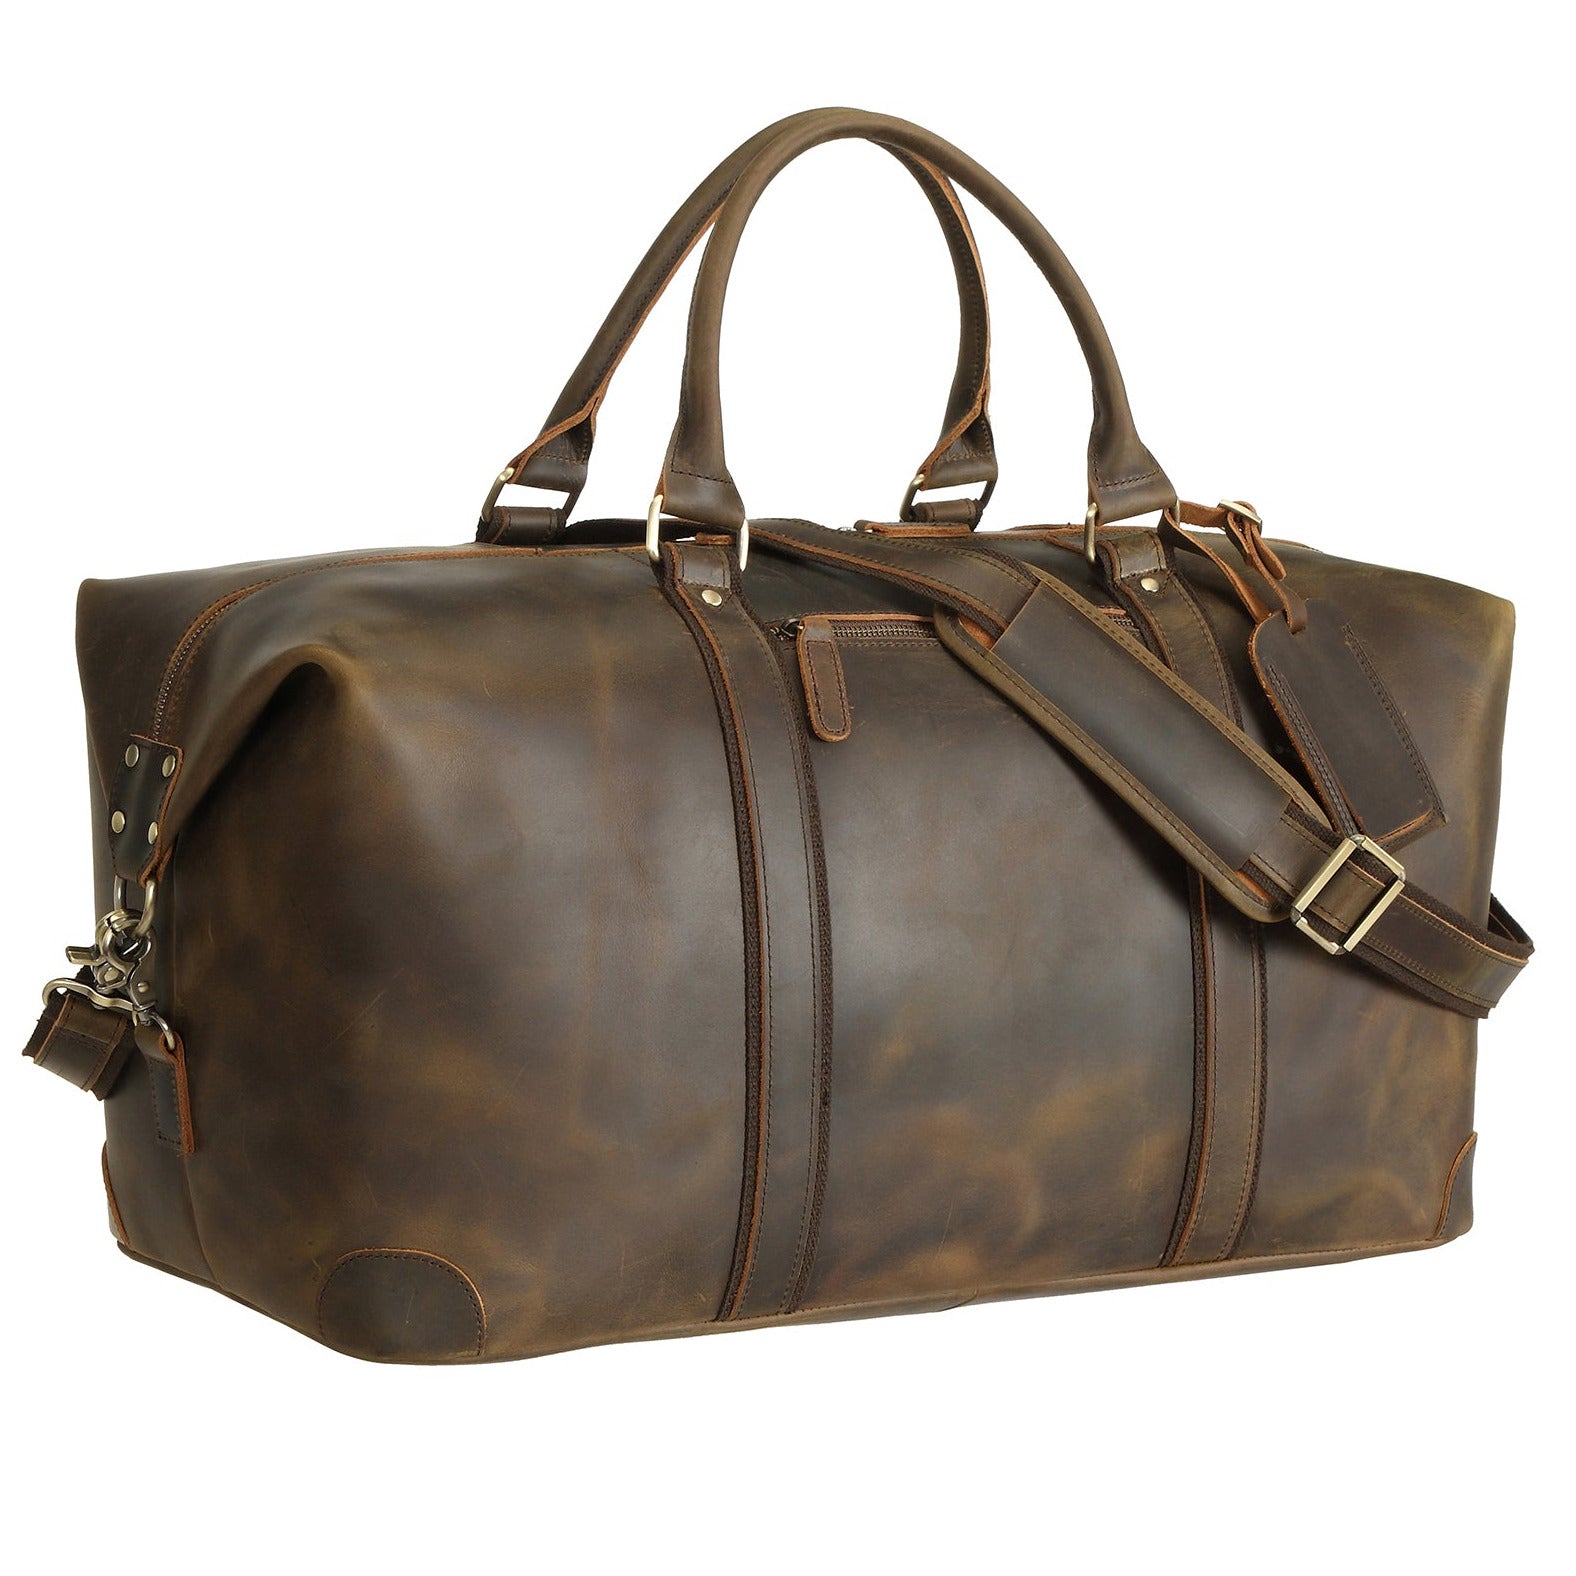 22" Full Grain Leather Travel Bag 42L Weekender Overnight Carry on Bag